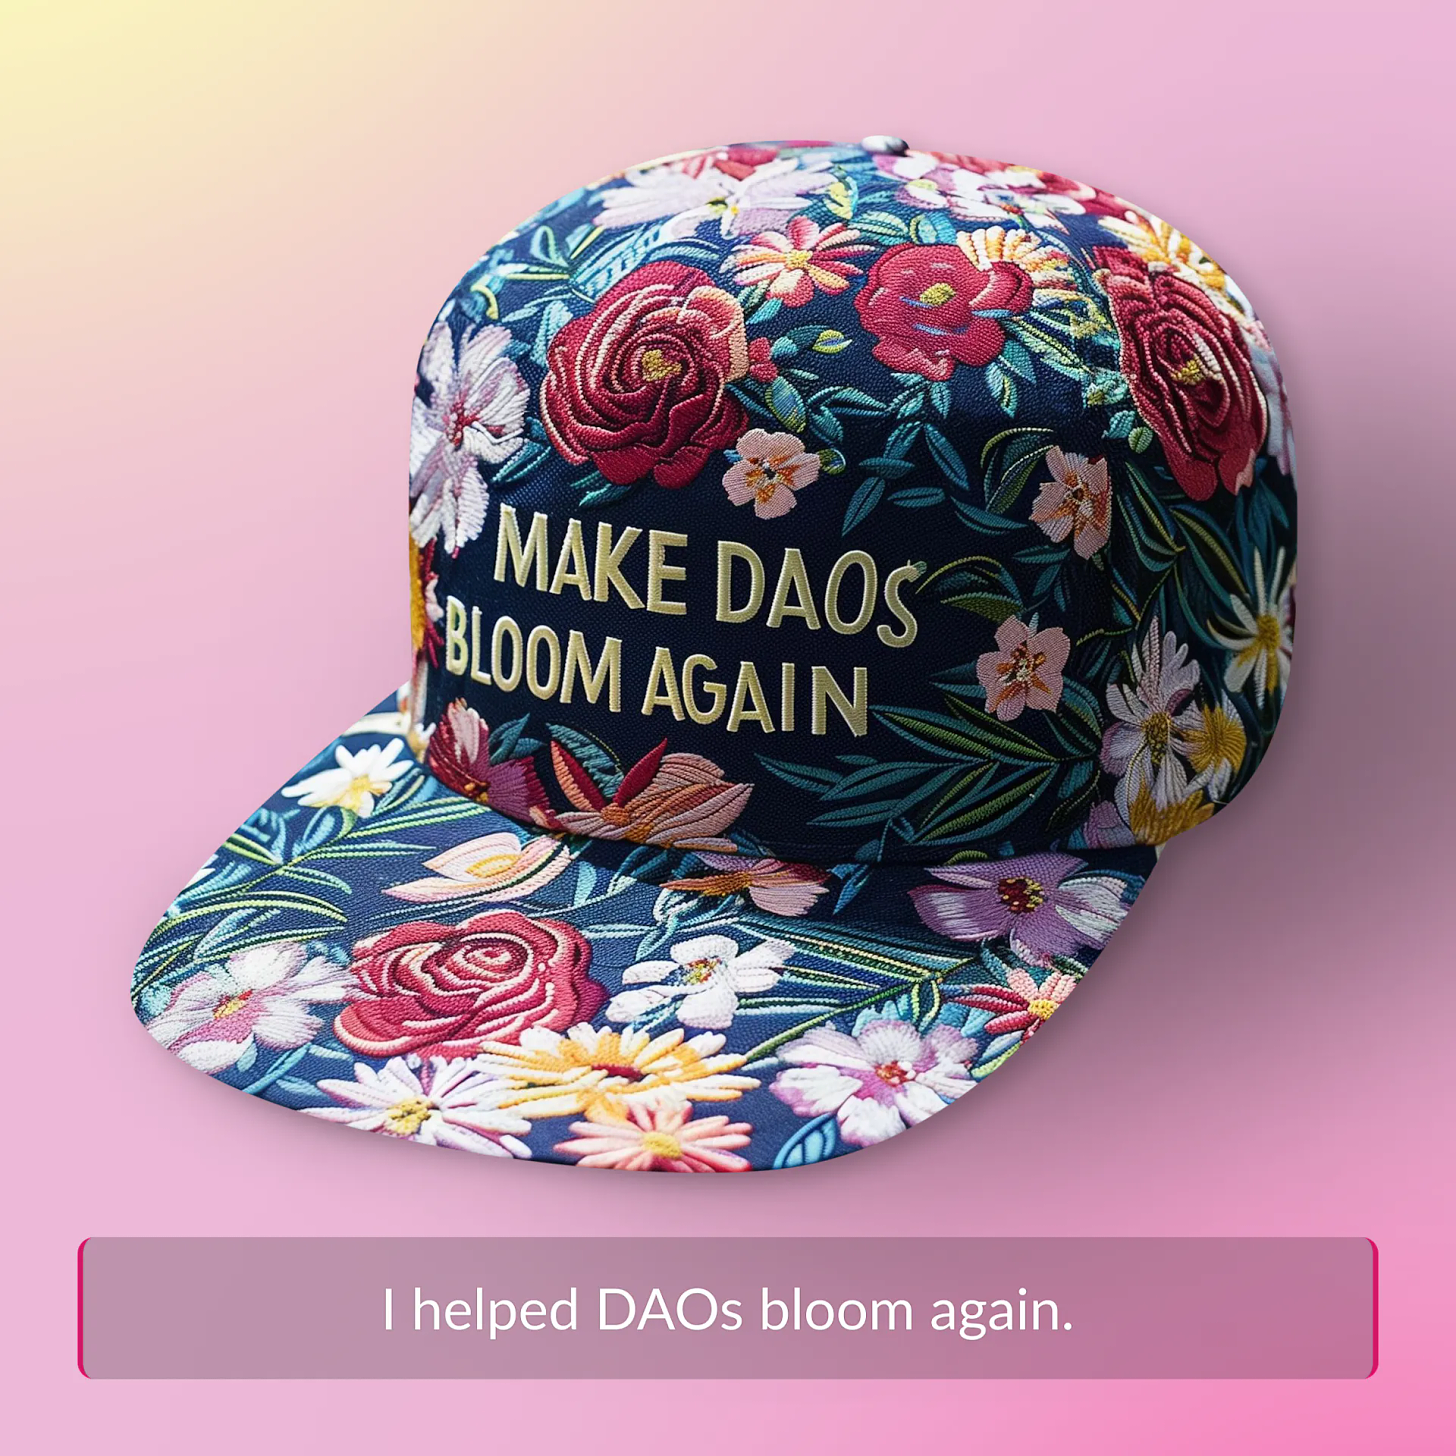 Make DAOs Bloom Again!